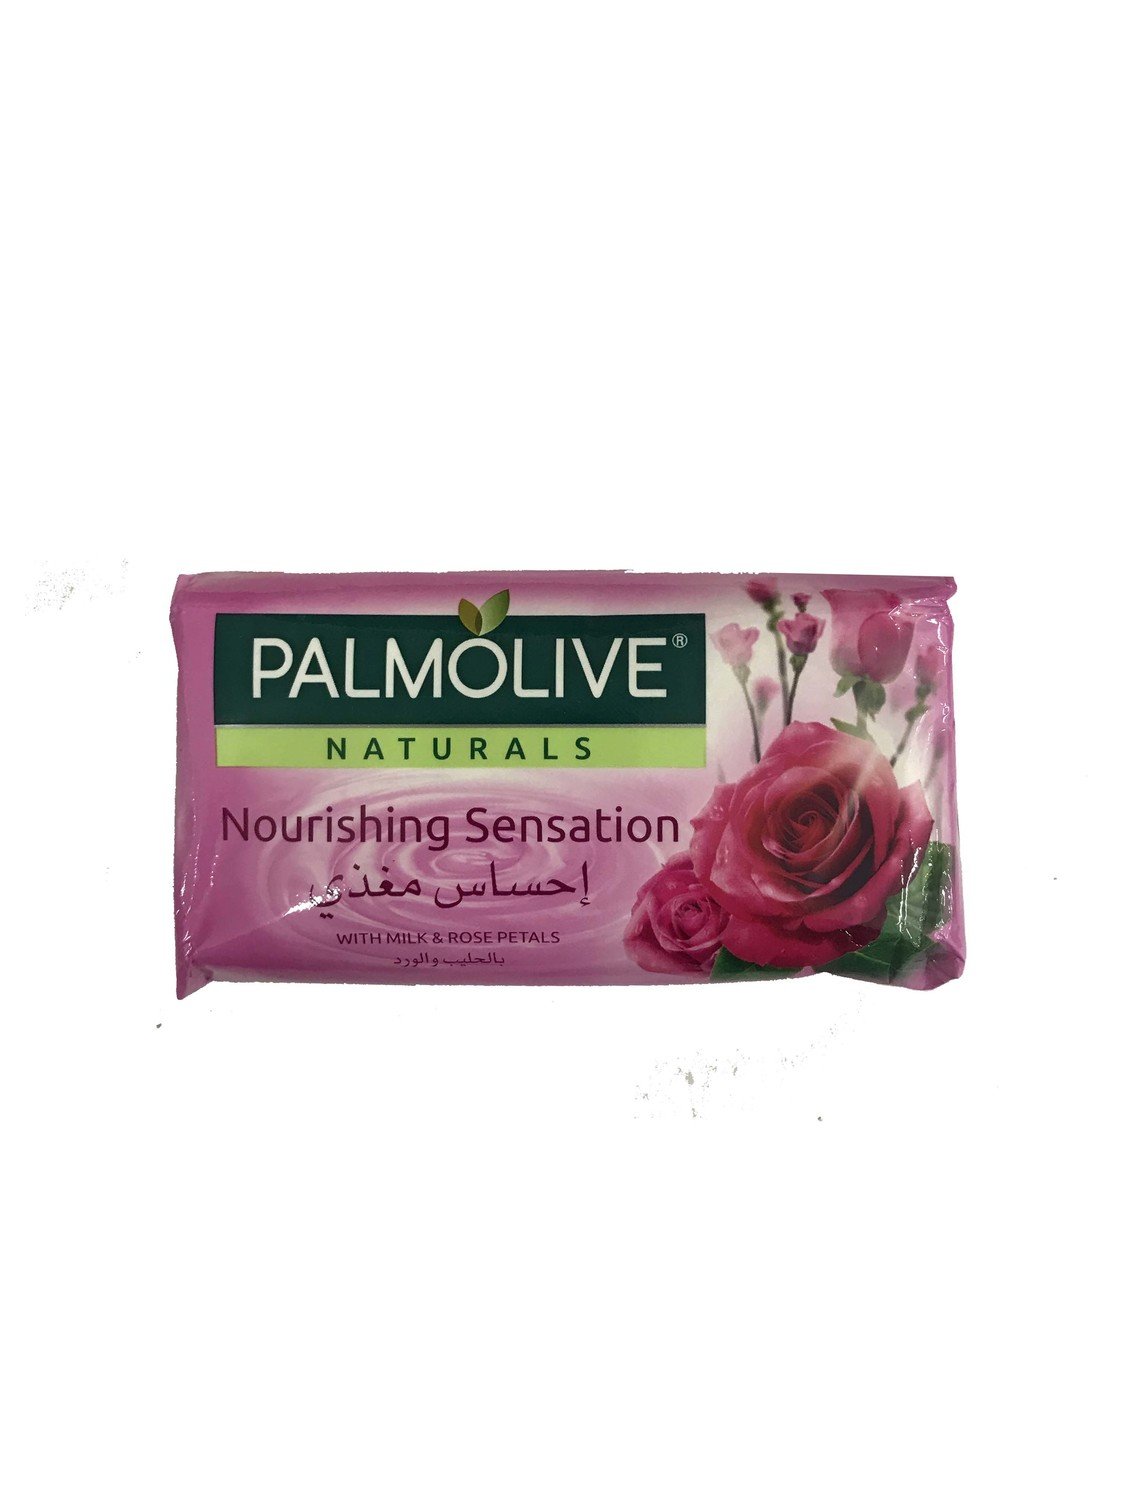 Palmolive Nourishing Sensation with Milk & Rose Petal 175g